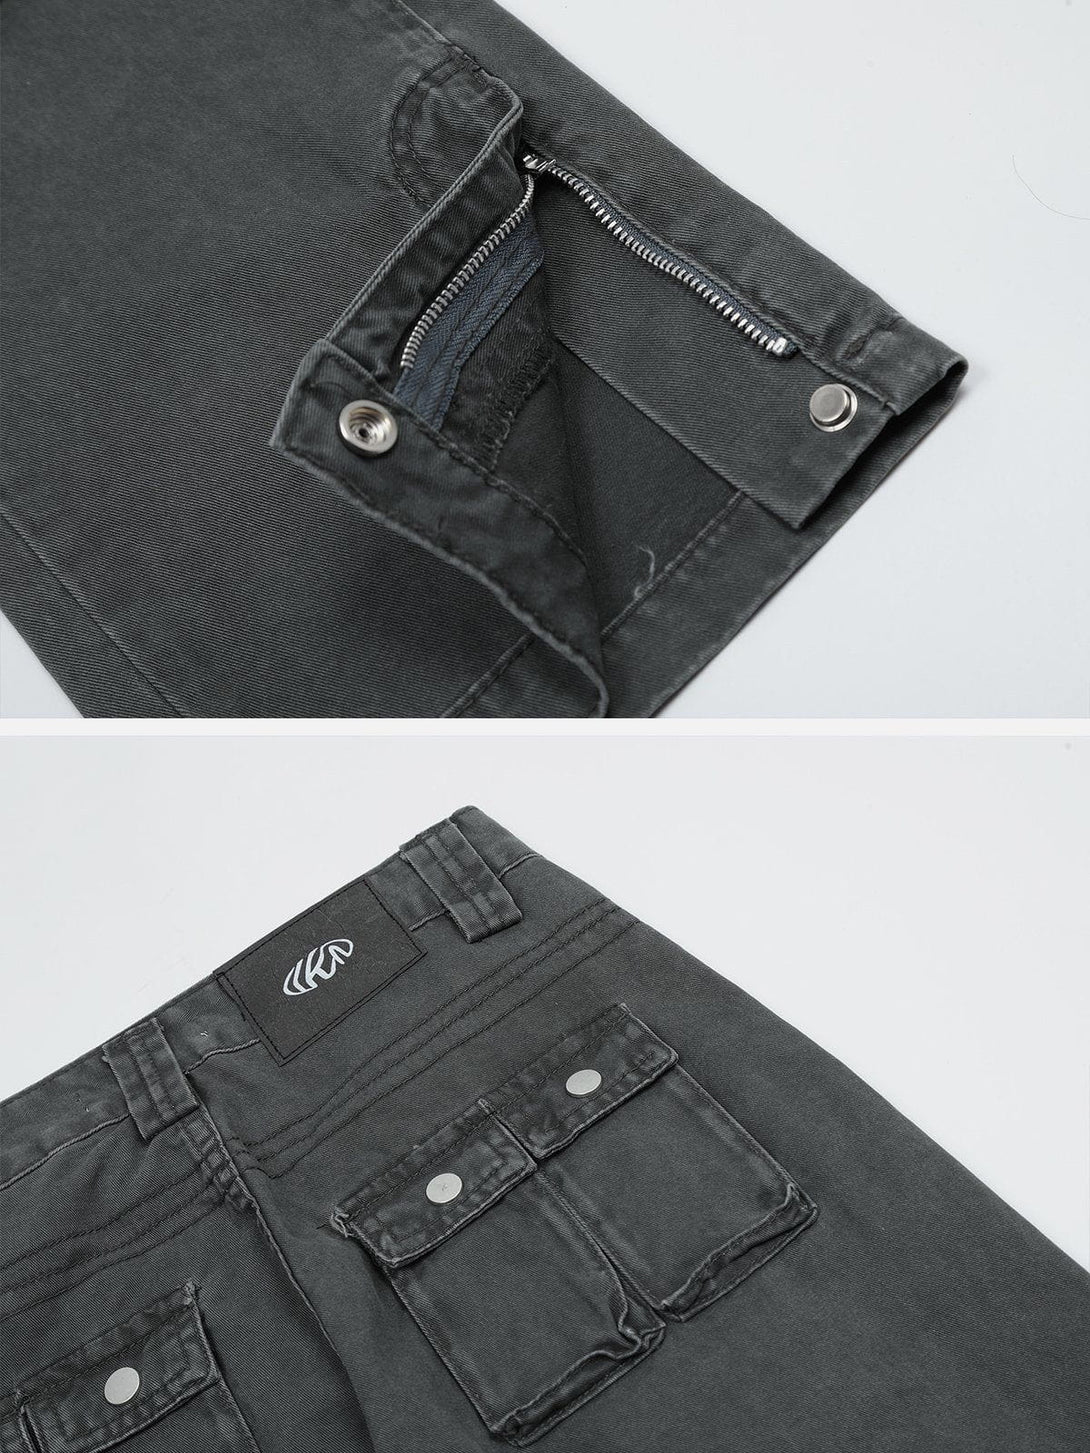 Majesda® - Multi Pocket Denim Cargo Pants outfit ideas streetwear fashion